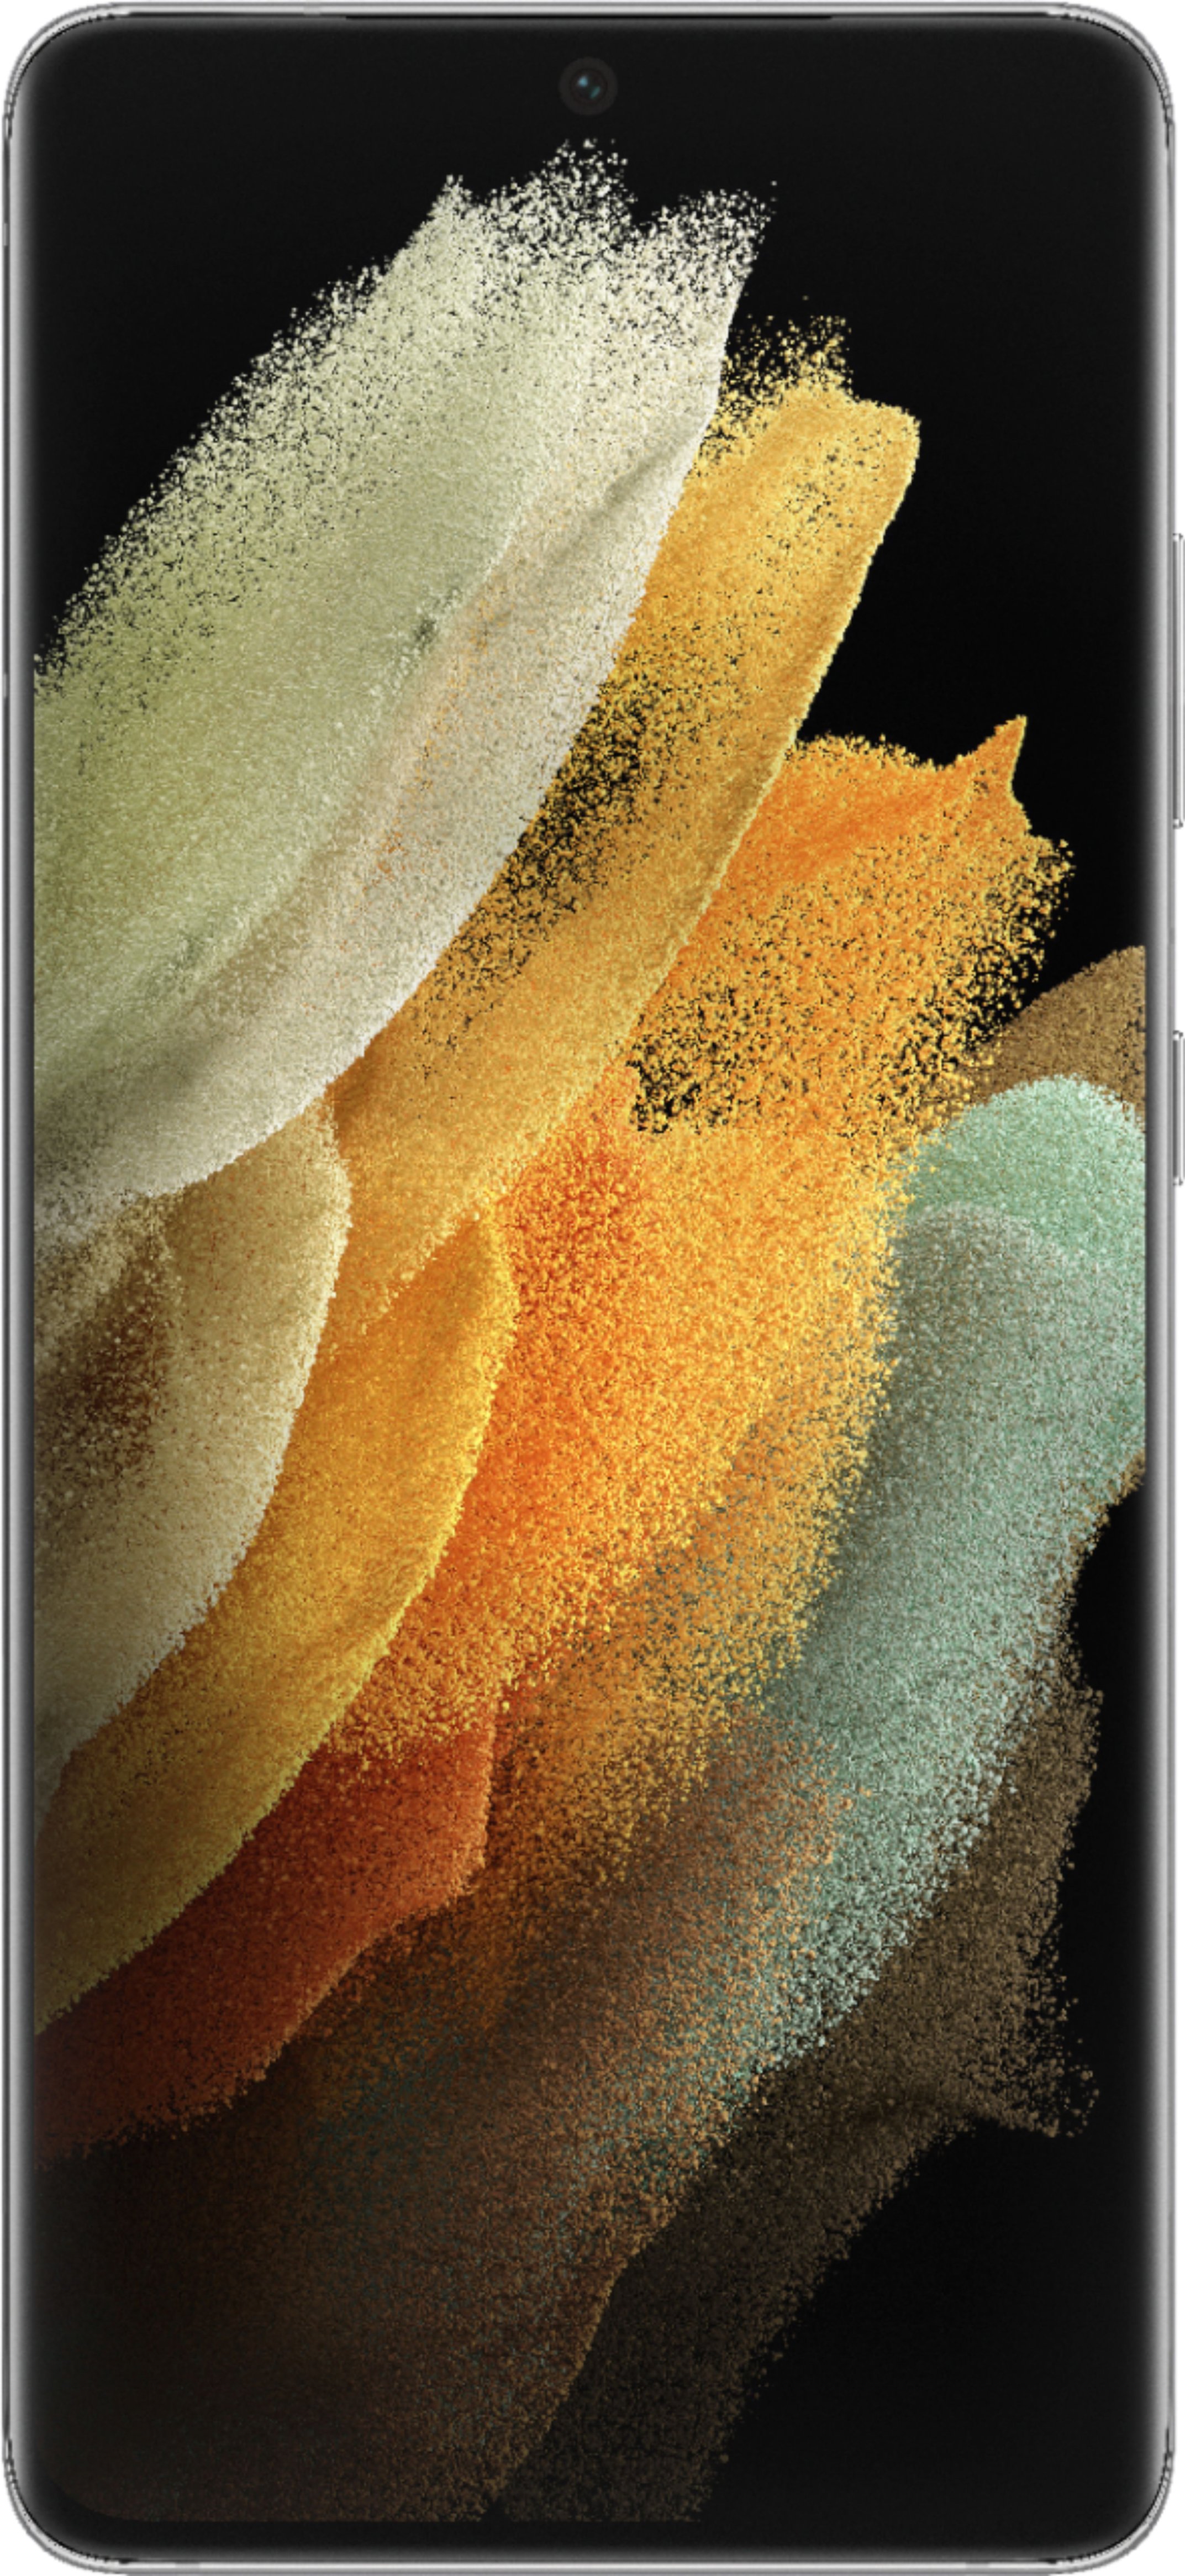 Unlocked Samsung Galaxy S21 Ultra 512GB for Sale in Sacramento, CA - OfferUp